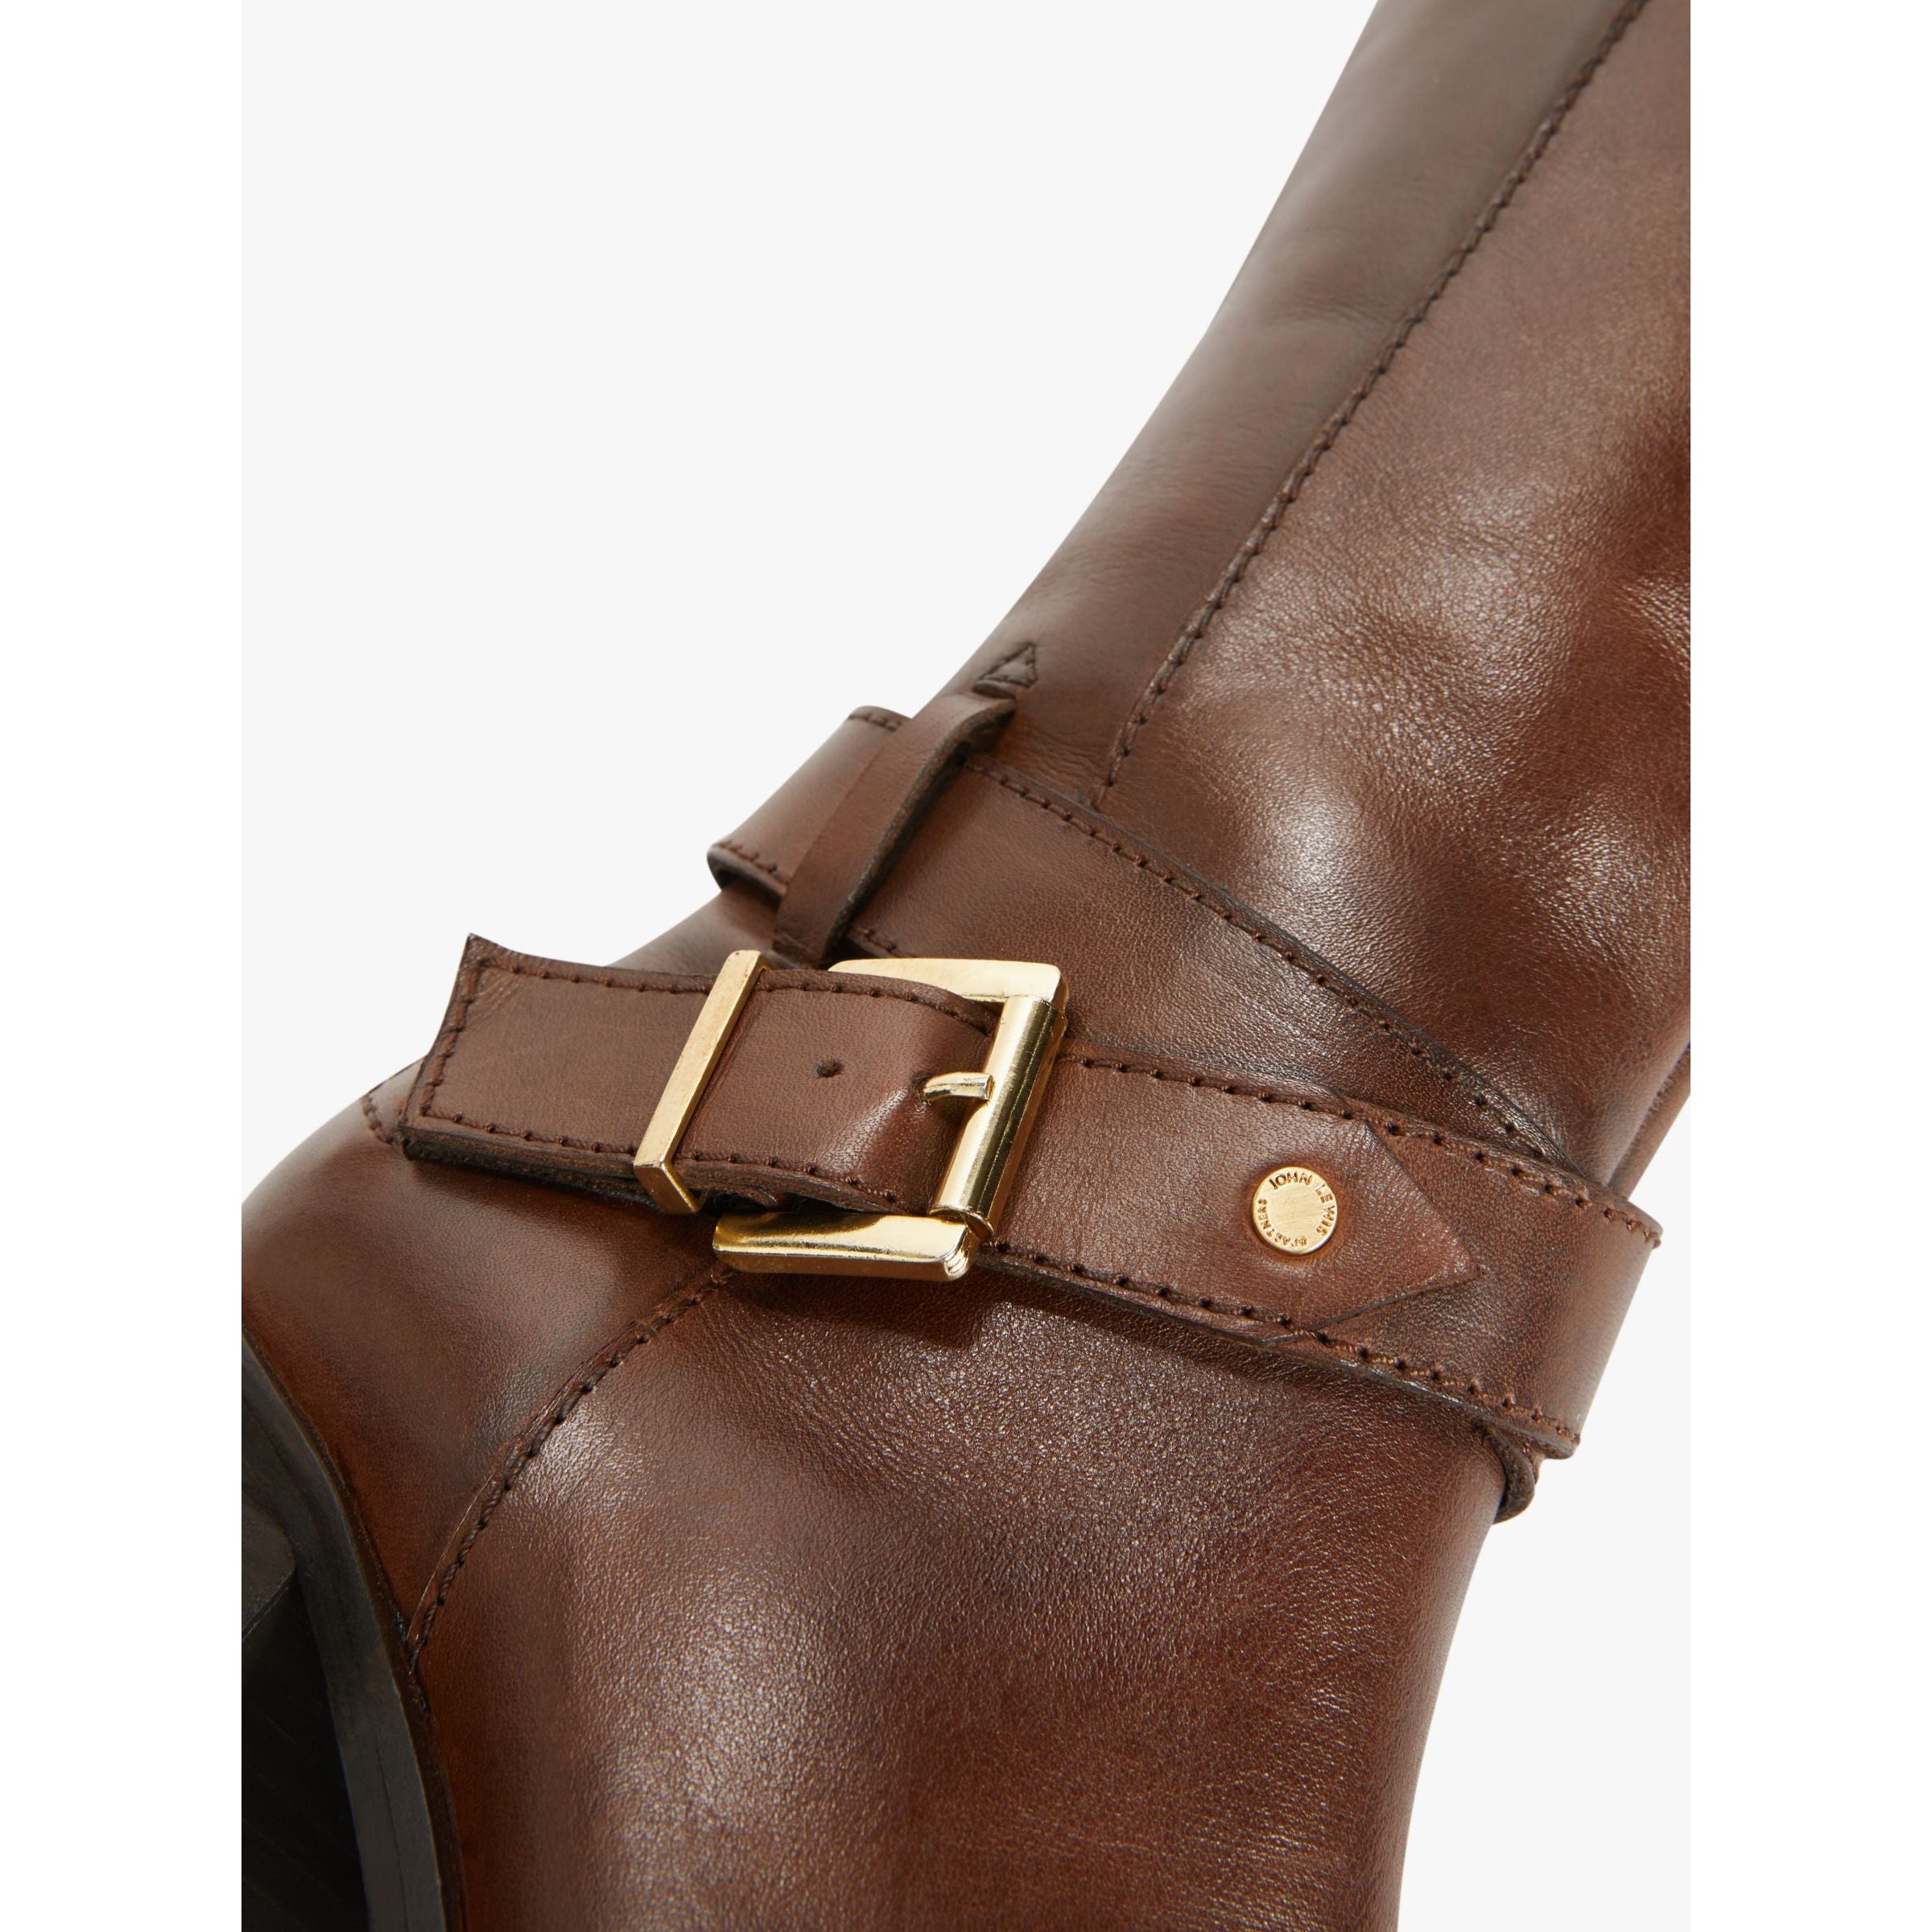 John Lewis Tamara Leather Harness Detail Heeled Knee High Boots, Brown